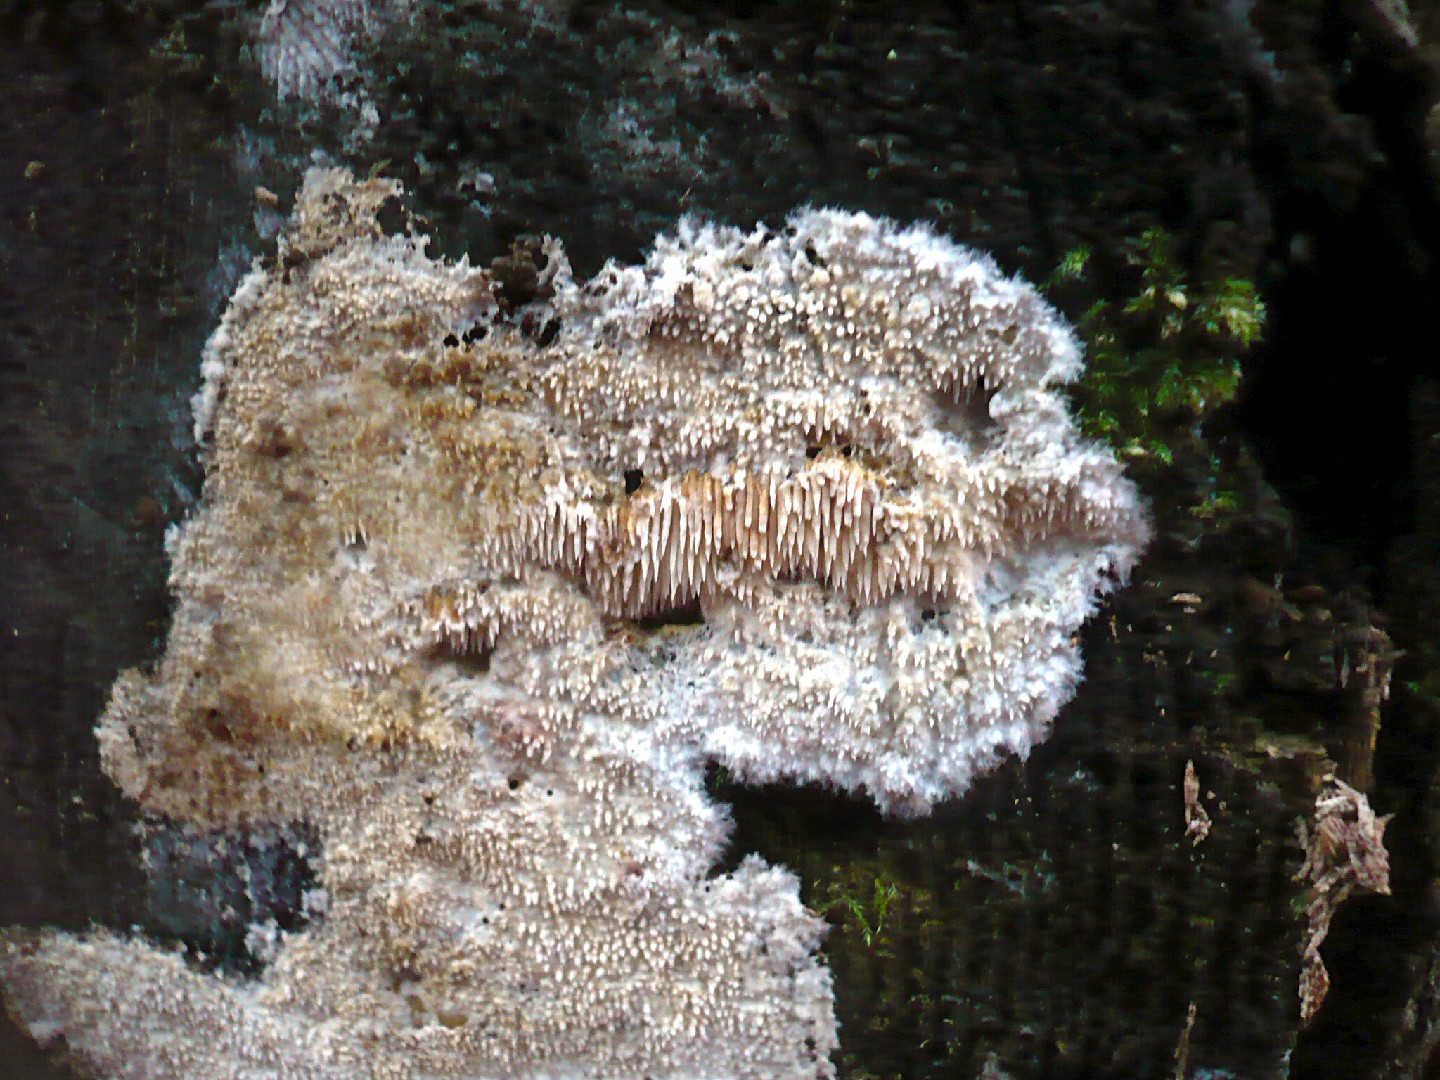 Zarter Stachelrindenpilz (Dentipellis fragilis)